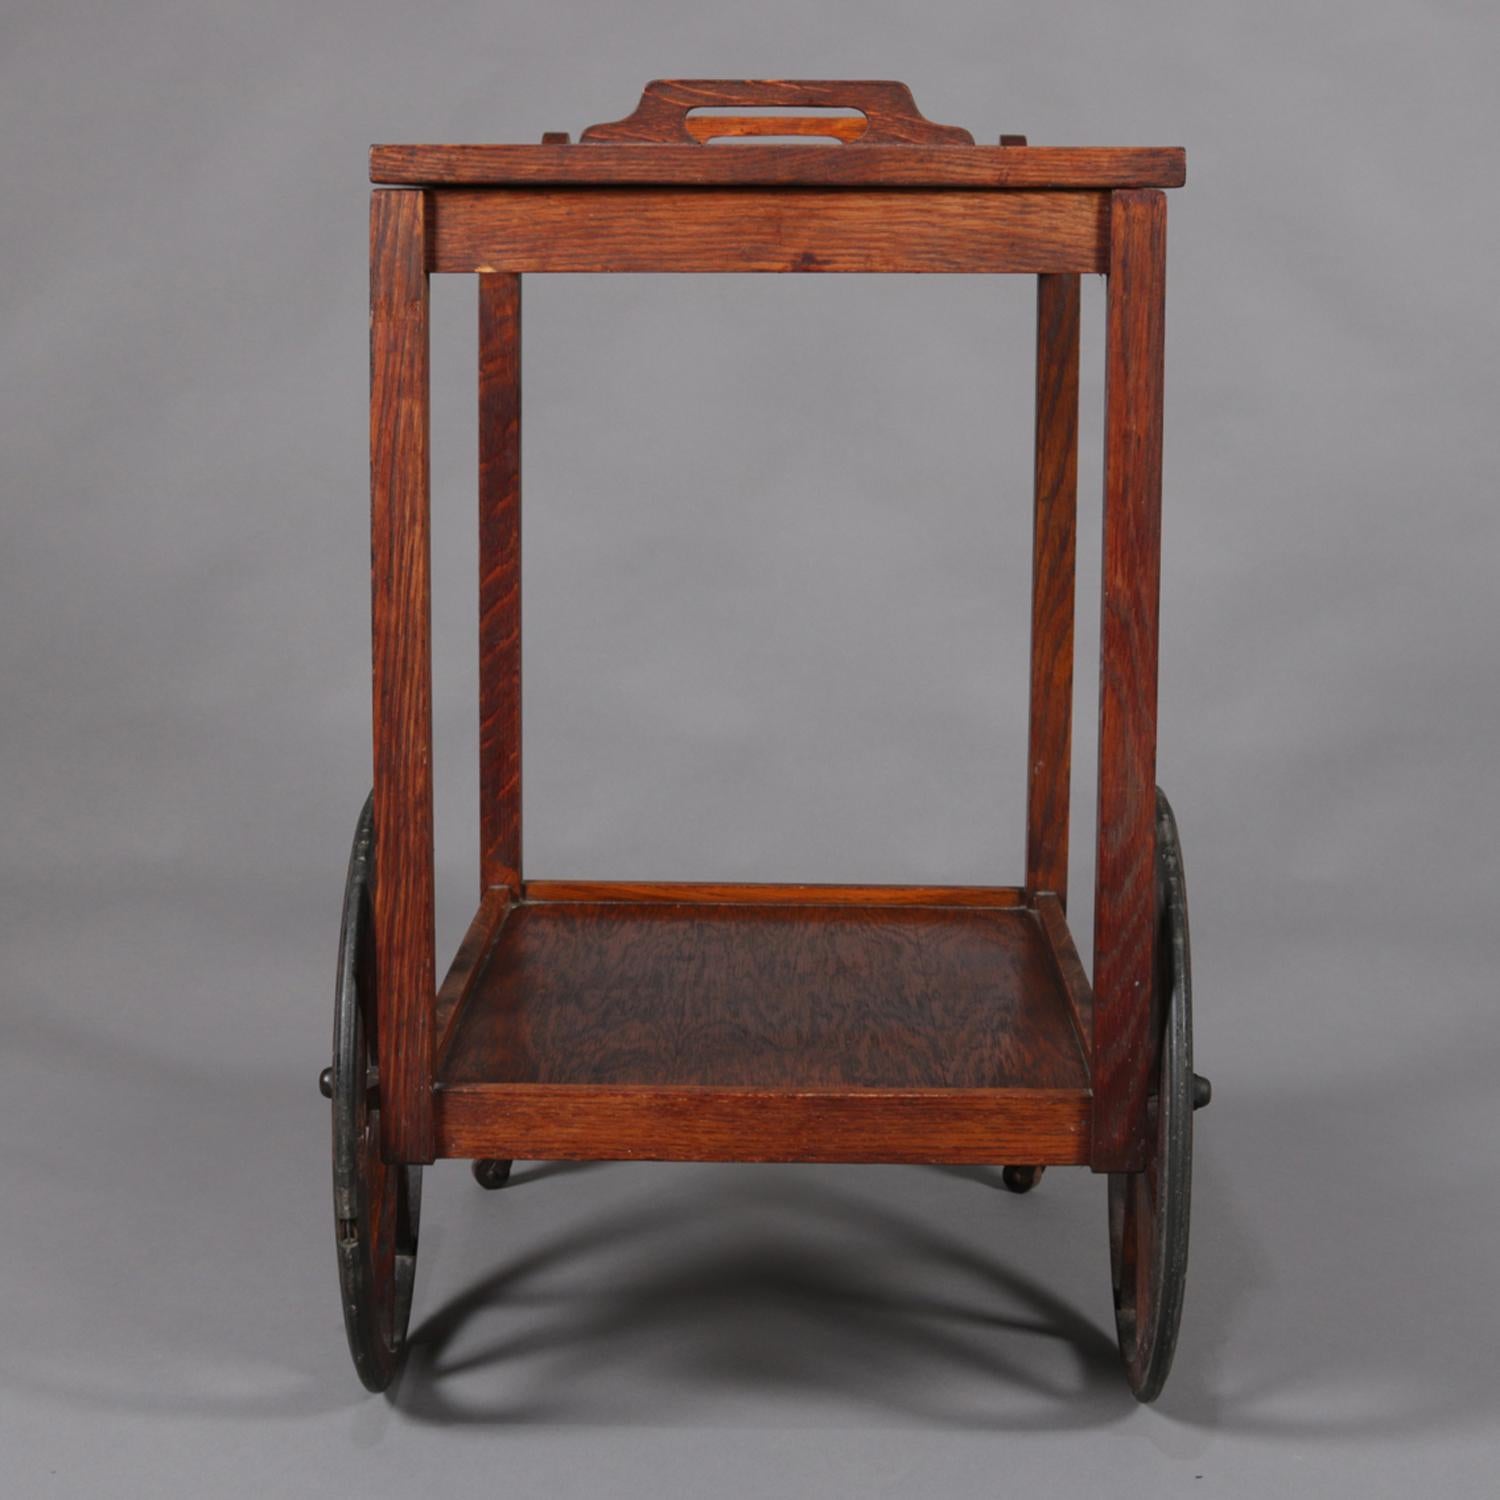 American Antique Arts & Crafts Stickley Bros. Mission Oak Tea Cart, Signed, circa 1910